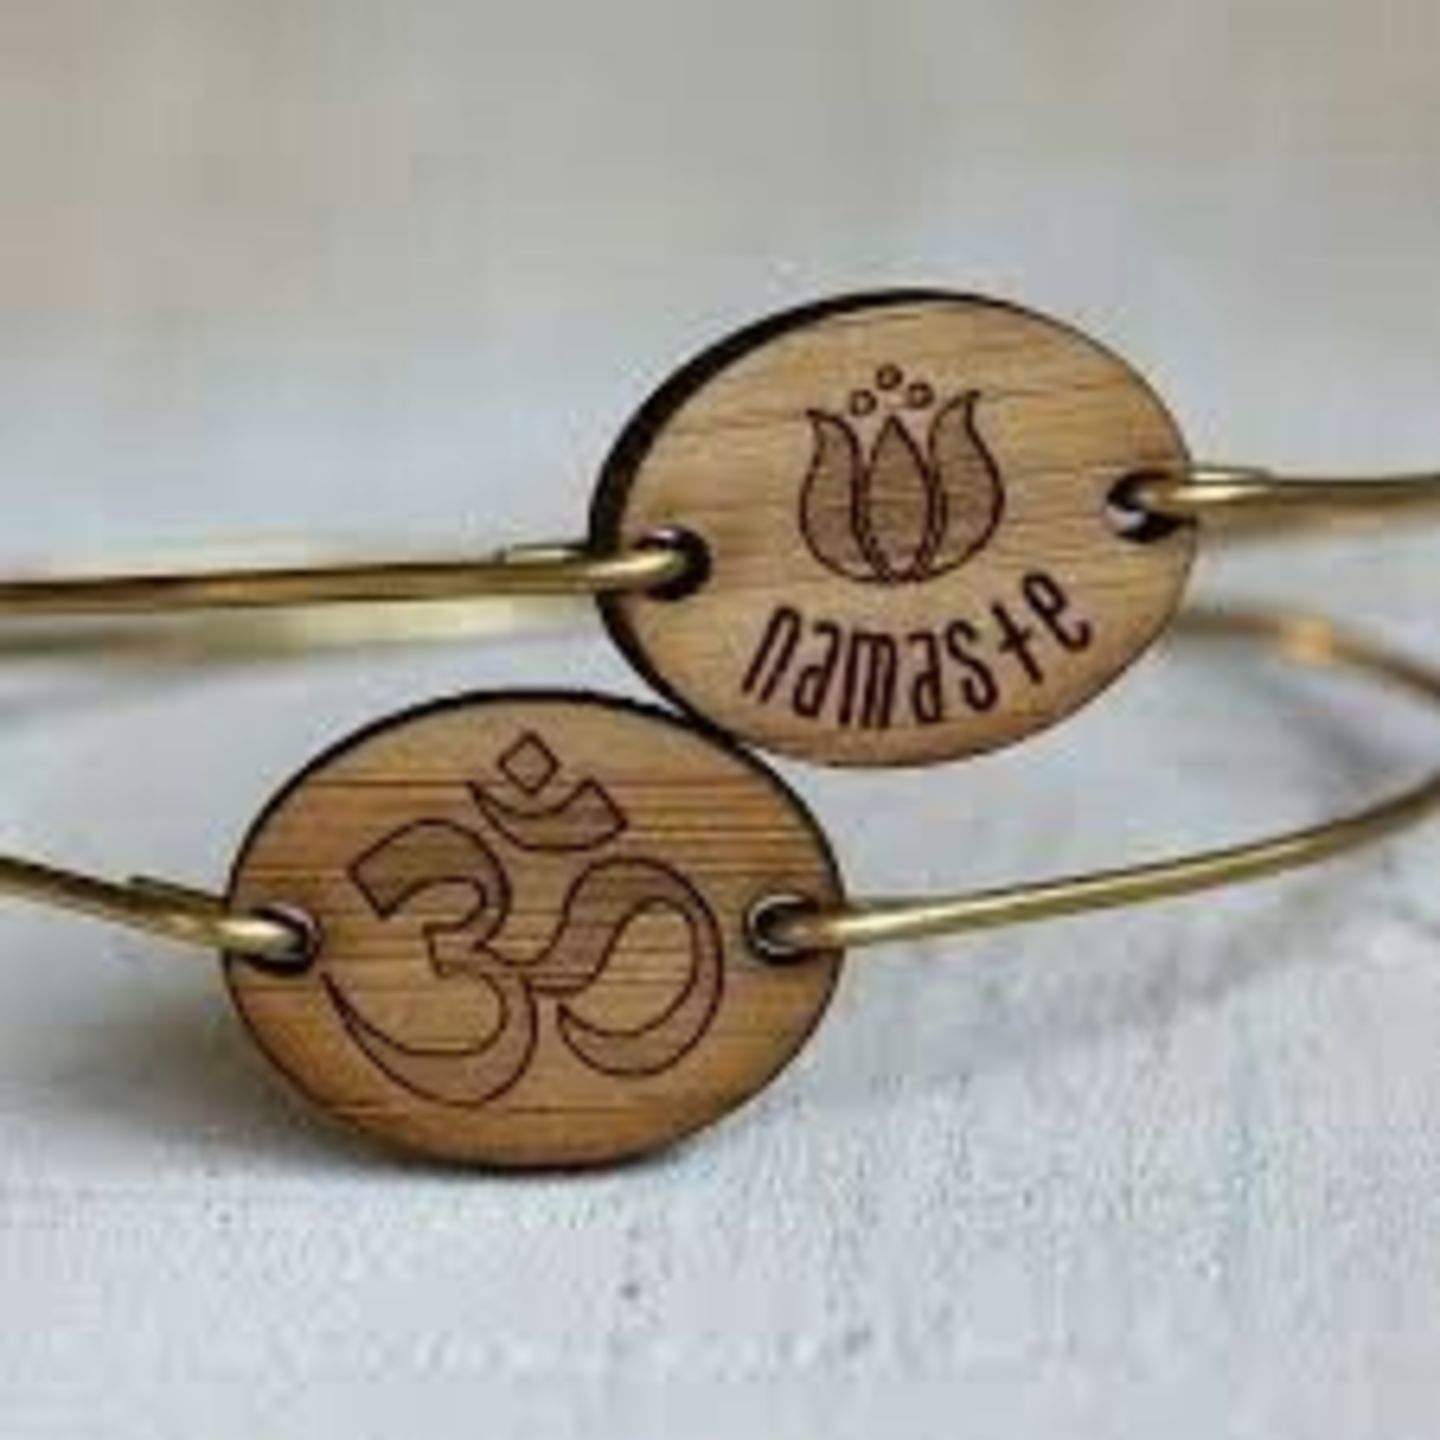 Wooden Bracelet 01